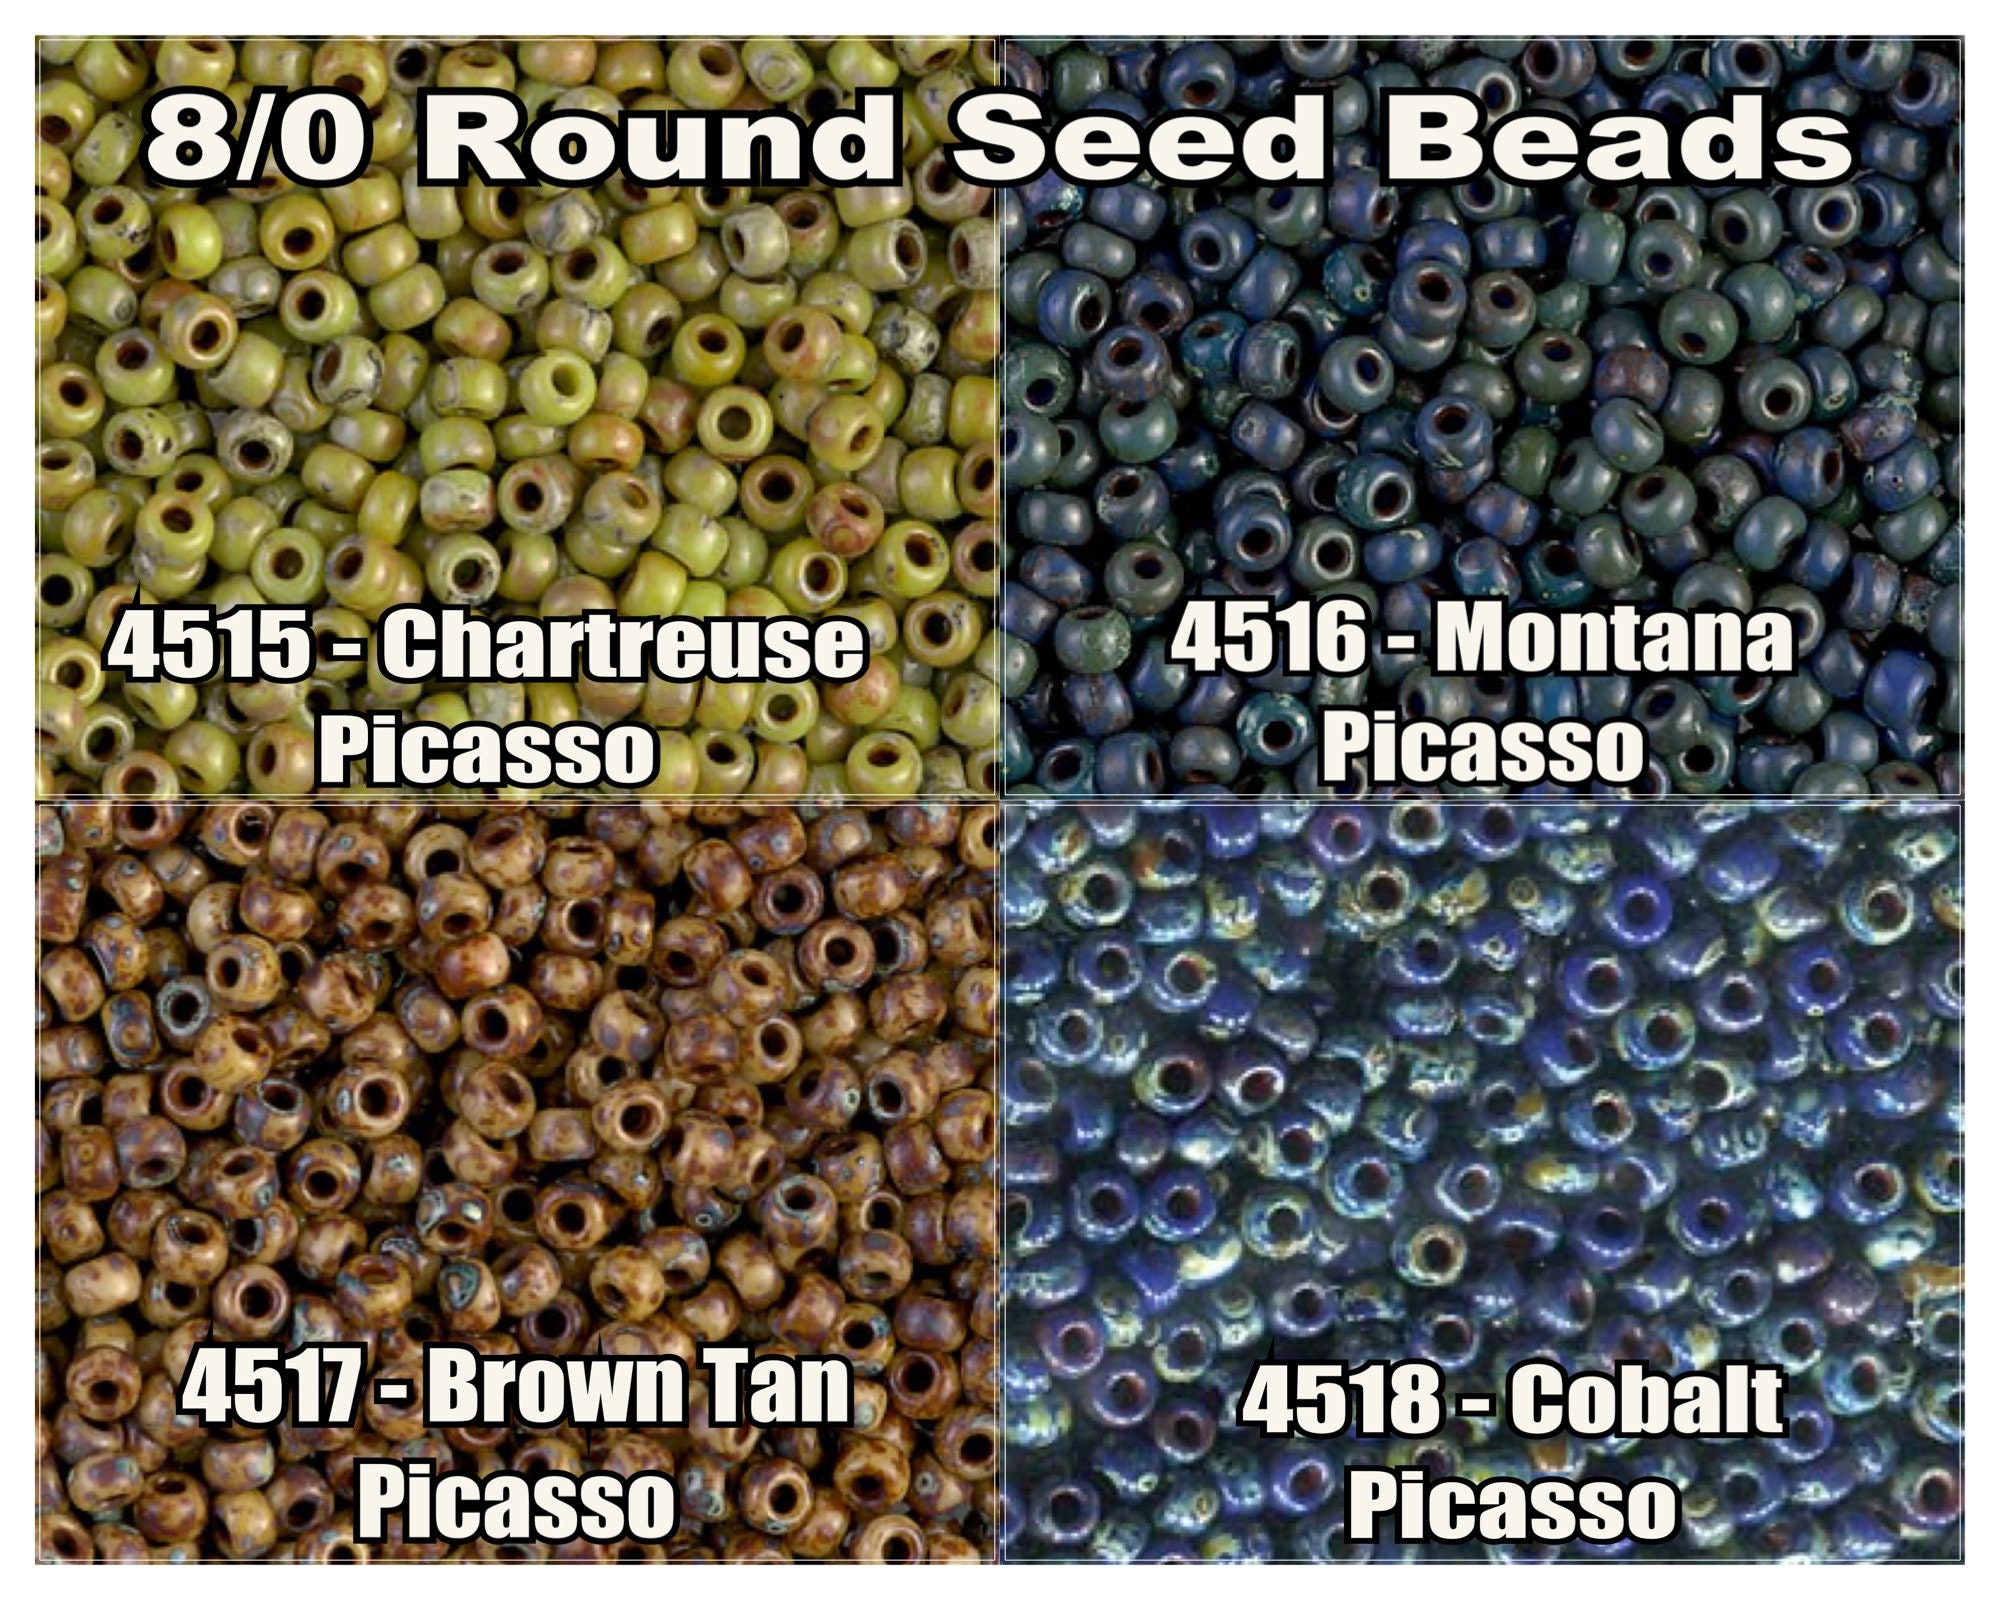 MIYUKI Glass Seed Beads, Japanese Seed Beads, 2mm or 11/0 Seed Beads, Wrap  Bracelet Beads, Seed Beads 